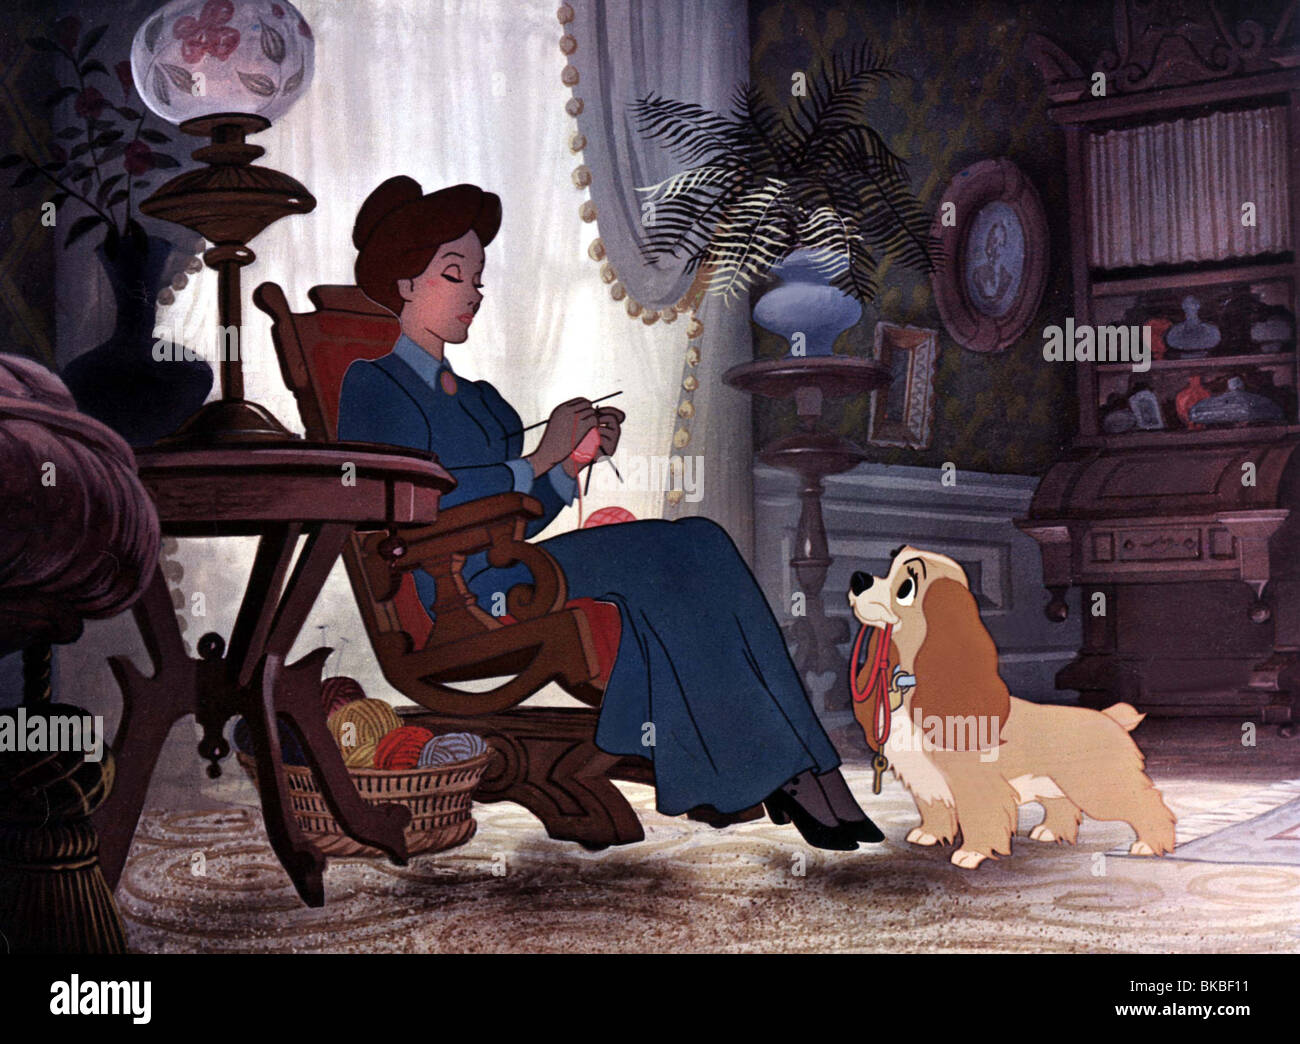 LADY AND THE TRAMP (ANI - 1955) ANIMATED CREDIT DISNEY LATT 015FOH Stock Photo